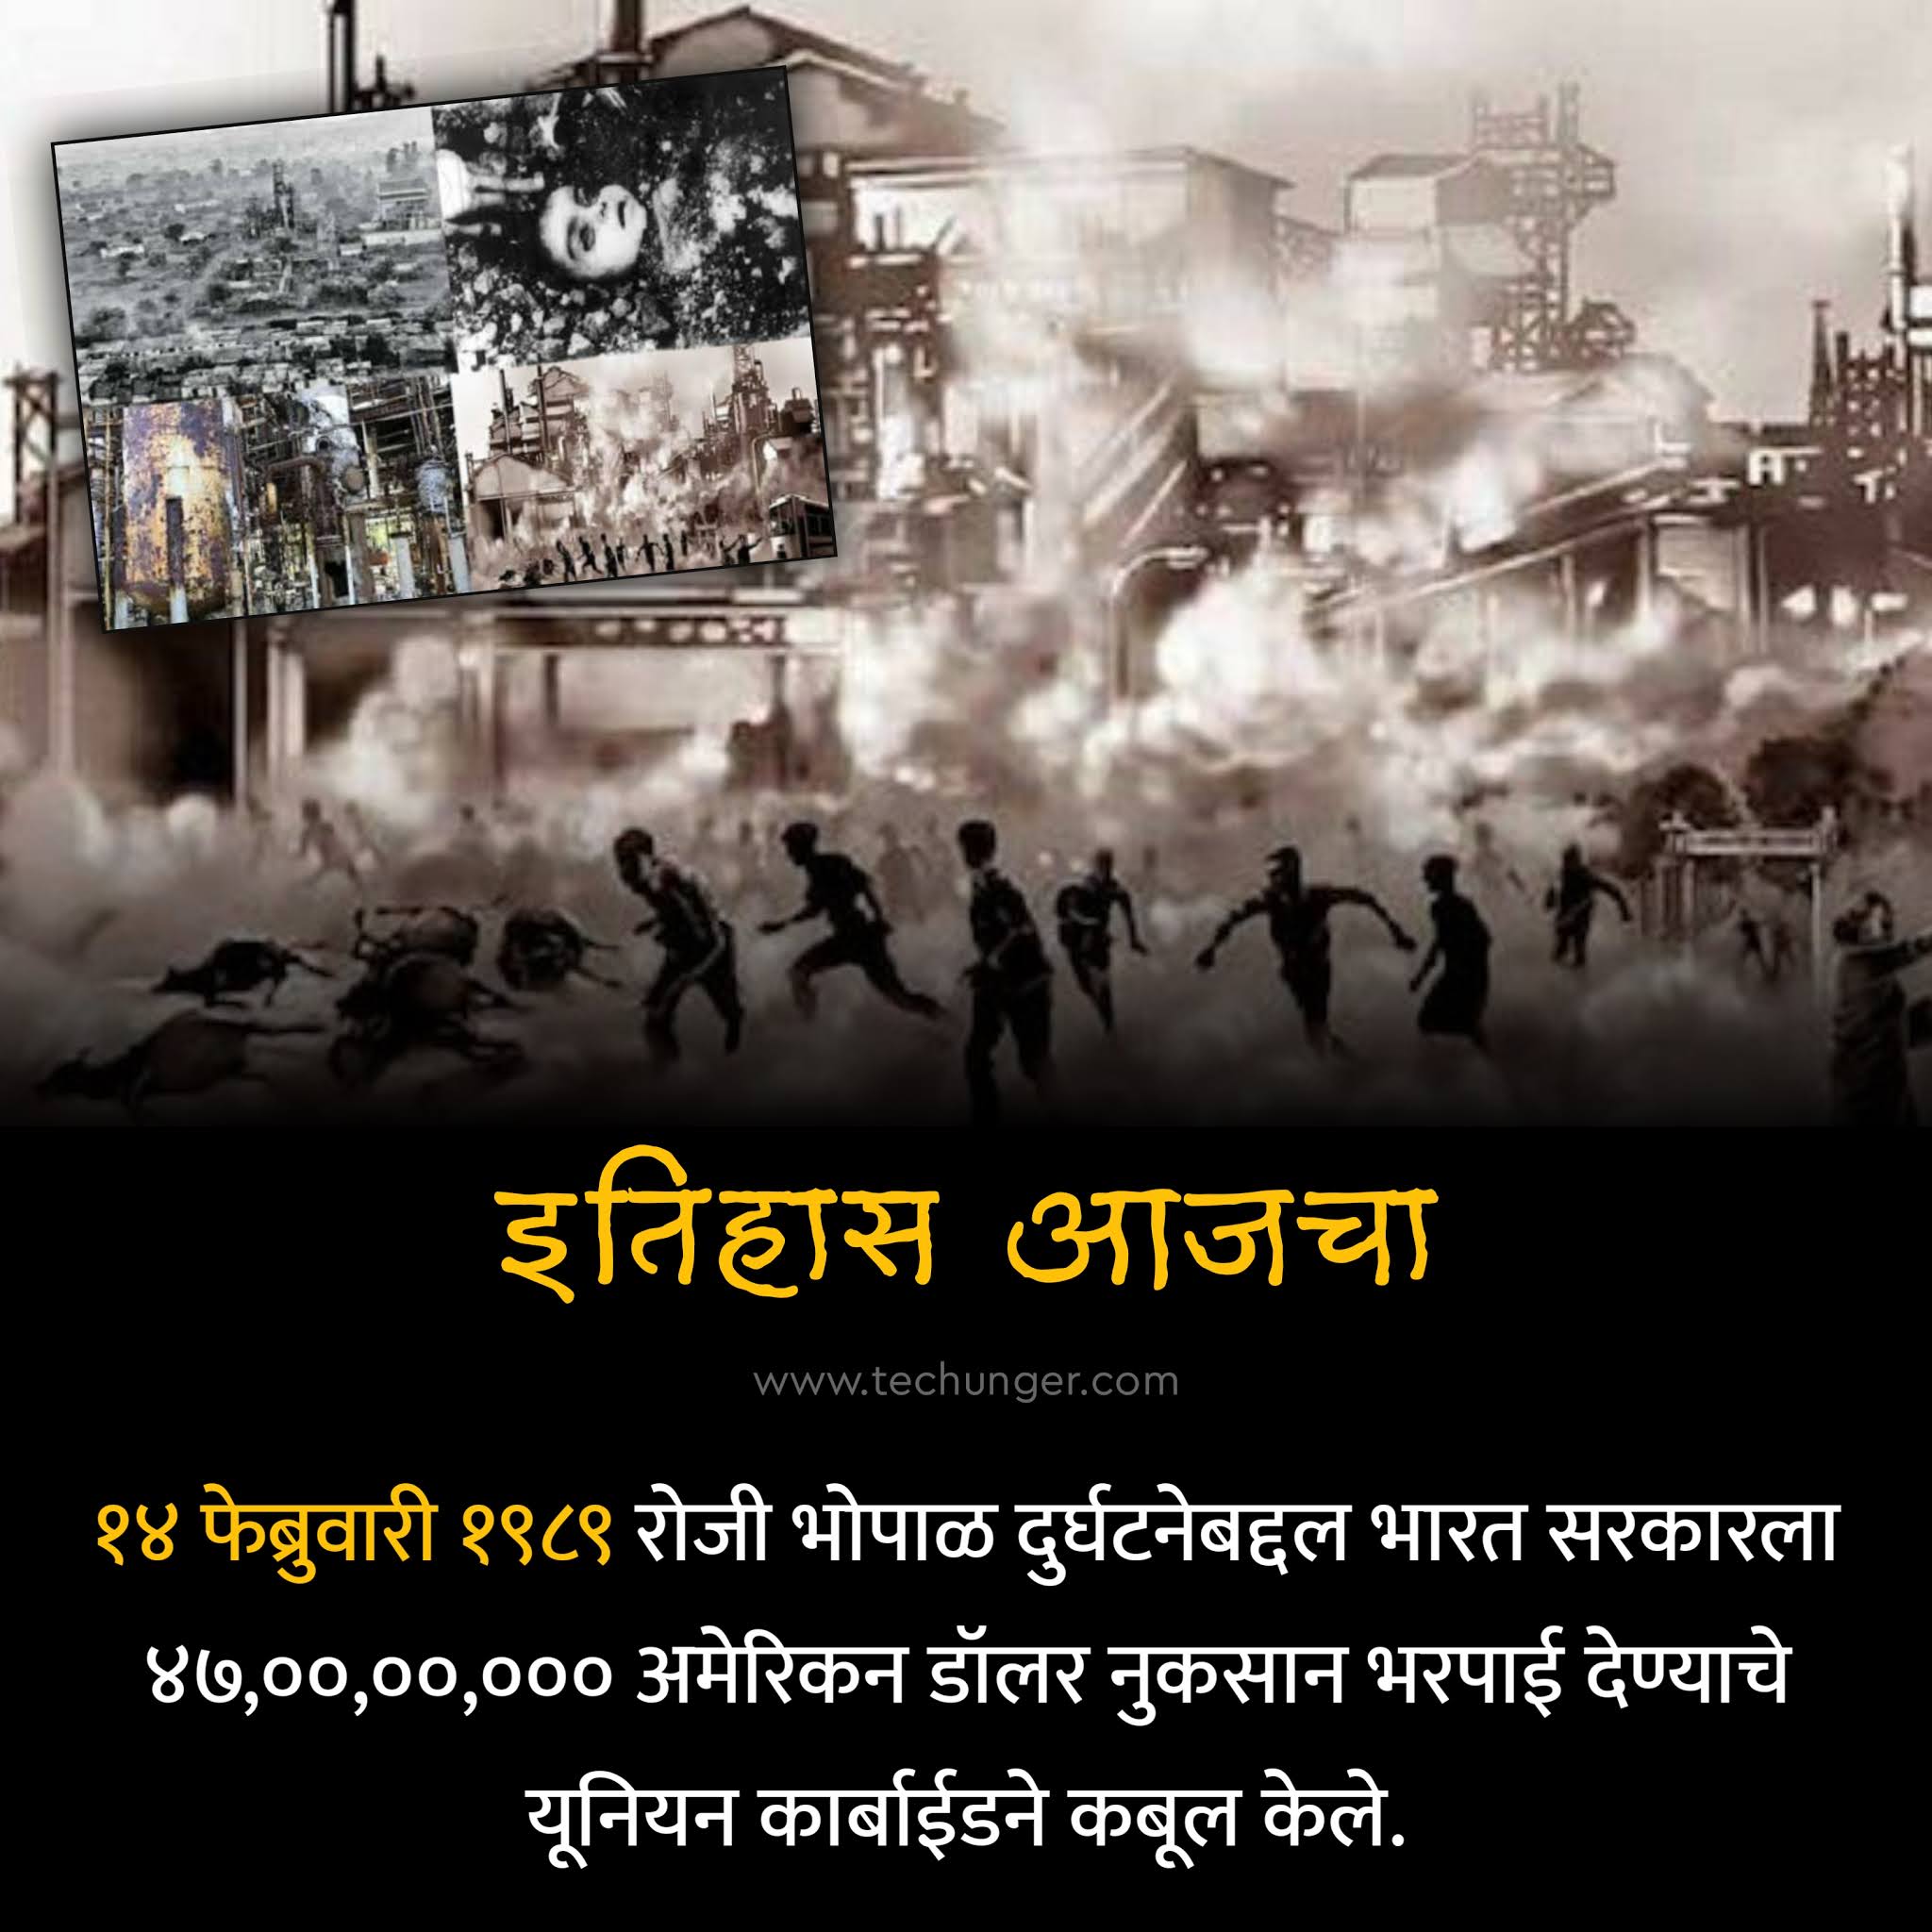 14 Feb, भोपाळ गॅस विध्वंस भरपाई कबूल...., bhopal gas tragedy, onthisday, मराठी दिनविशेष, Marathi Dinvishesh, TecHunger, Saurabh Chaudhari